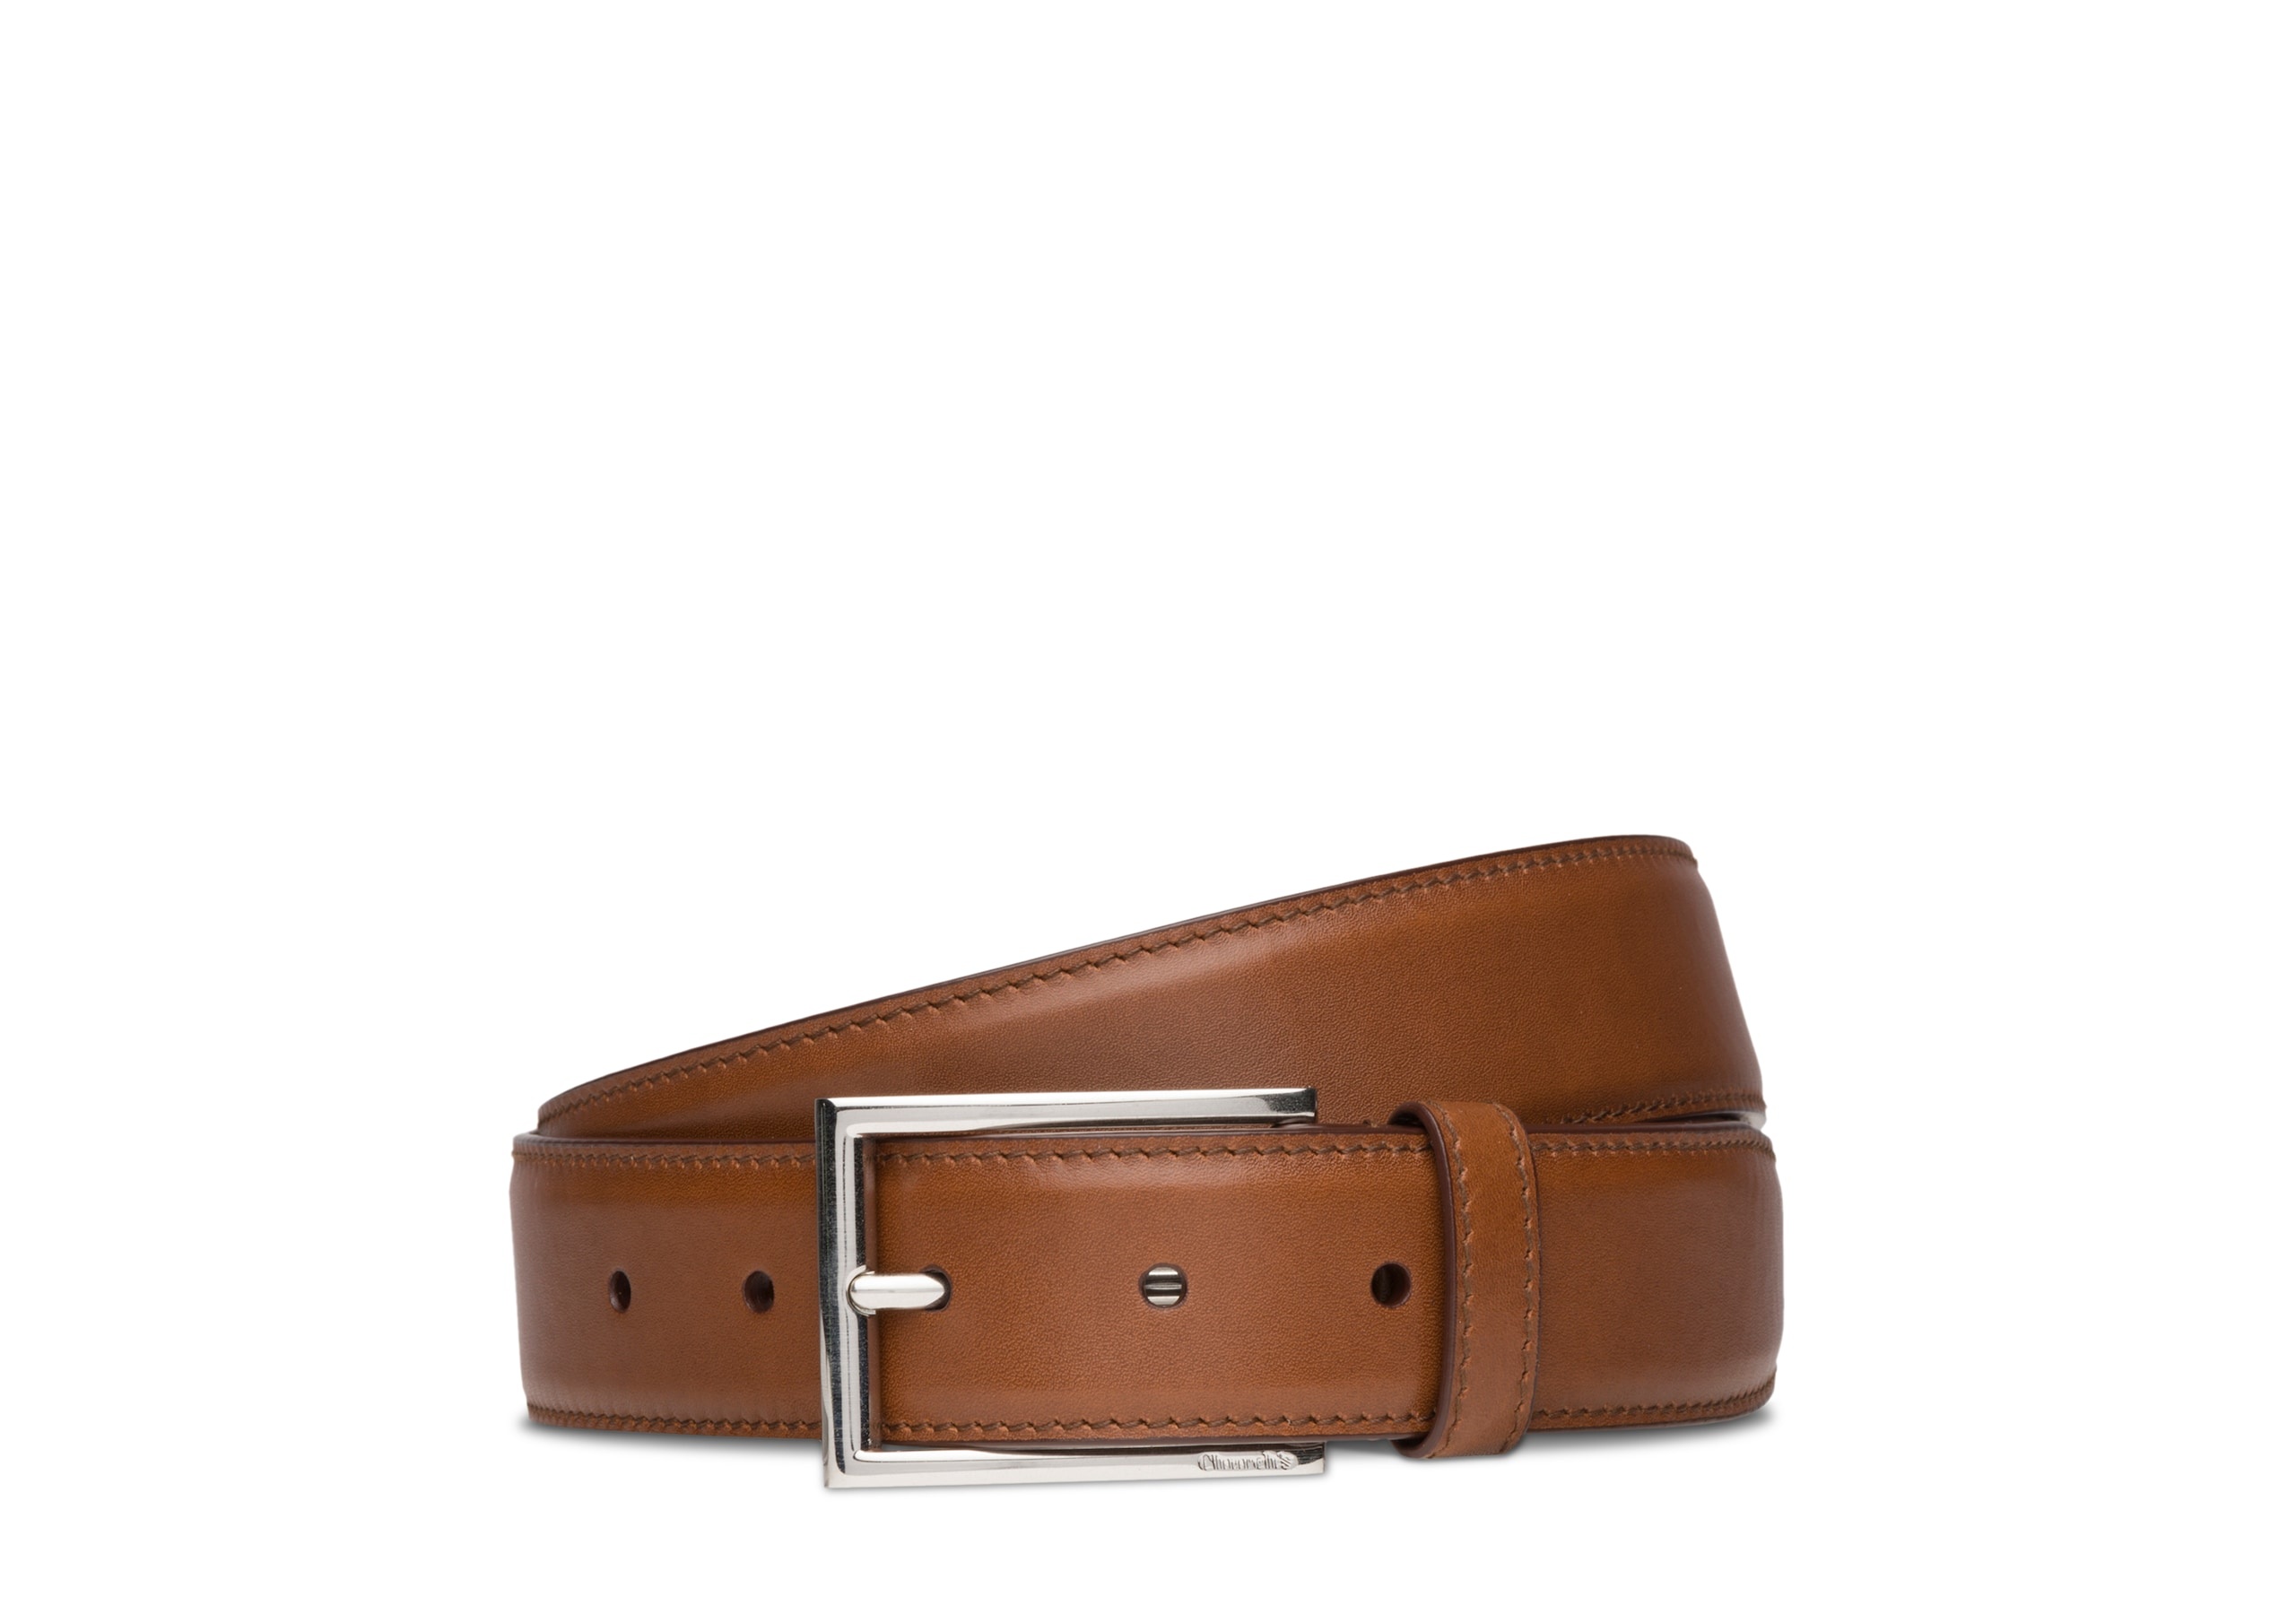 Elongated buckle belt
Nevada Leather Walnut - 1